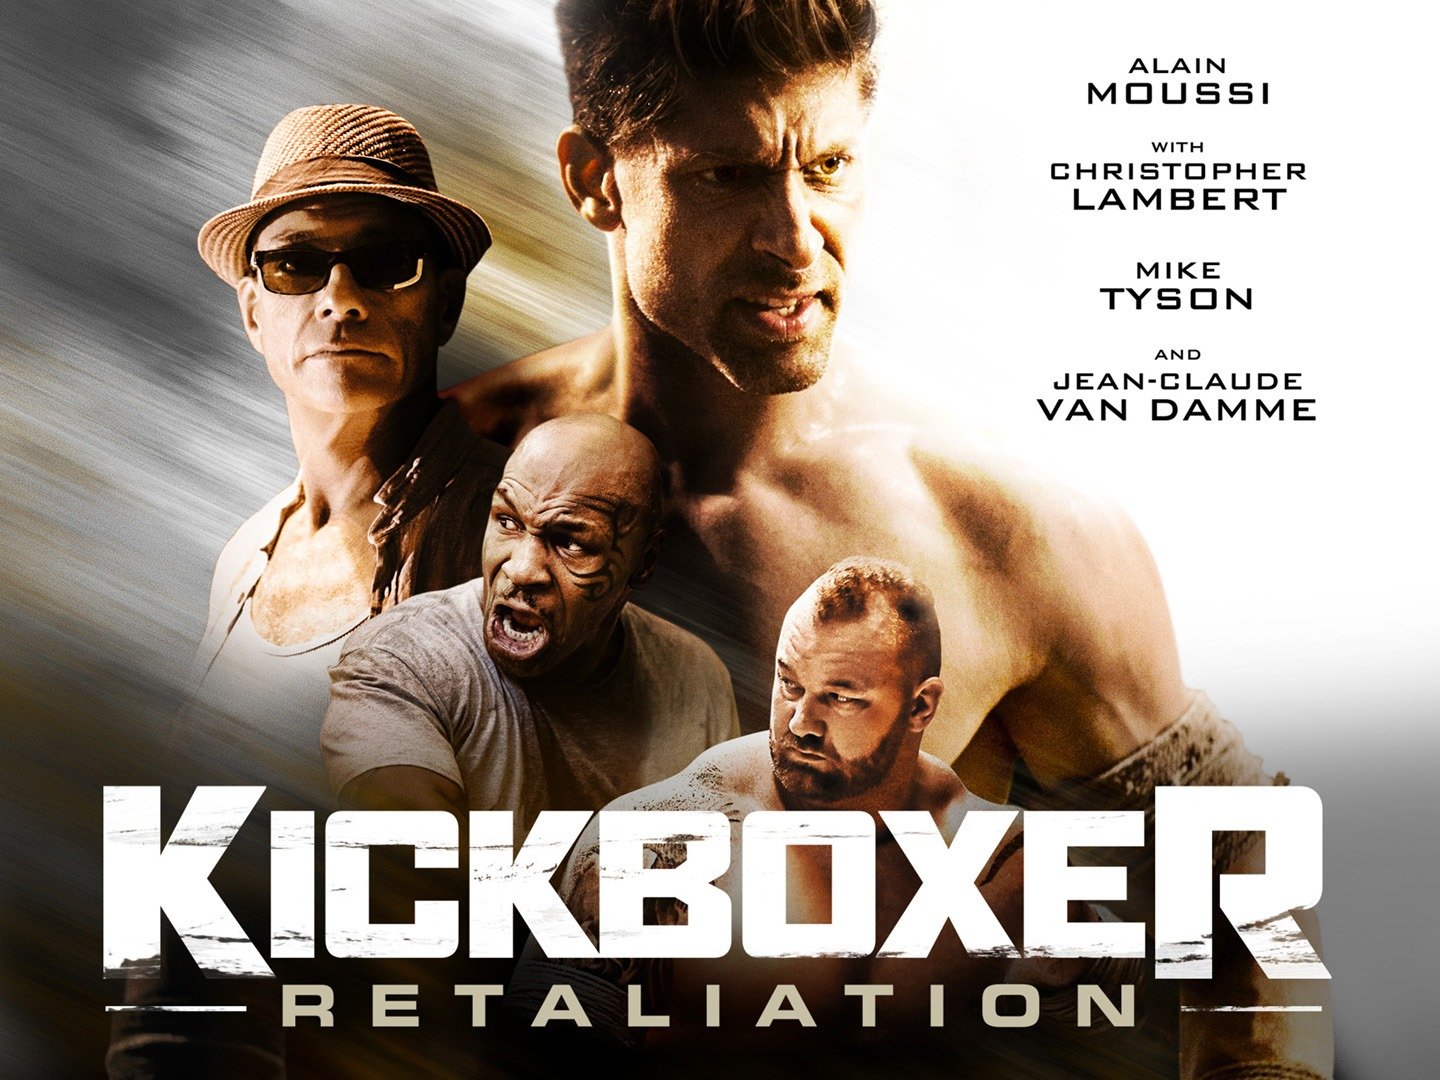 Kickboxer Retaliation Trailer 1 Trailers And Videos Rotten Tomatoes 9545